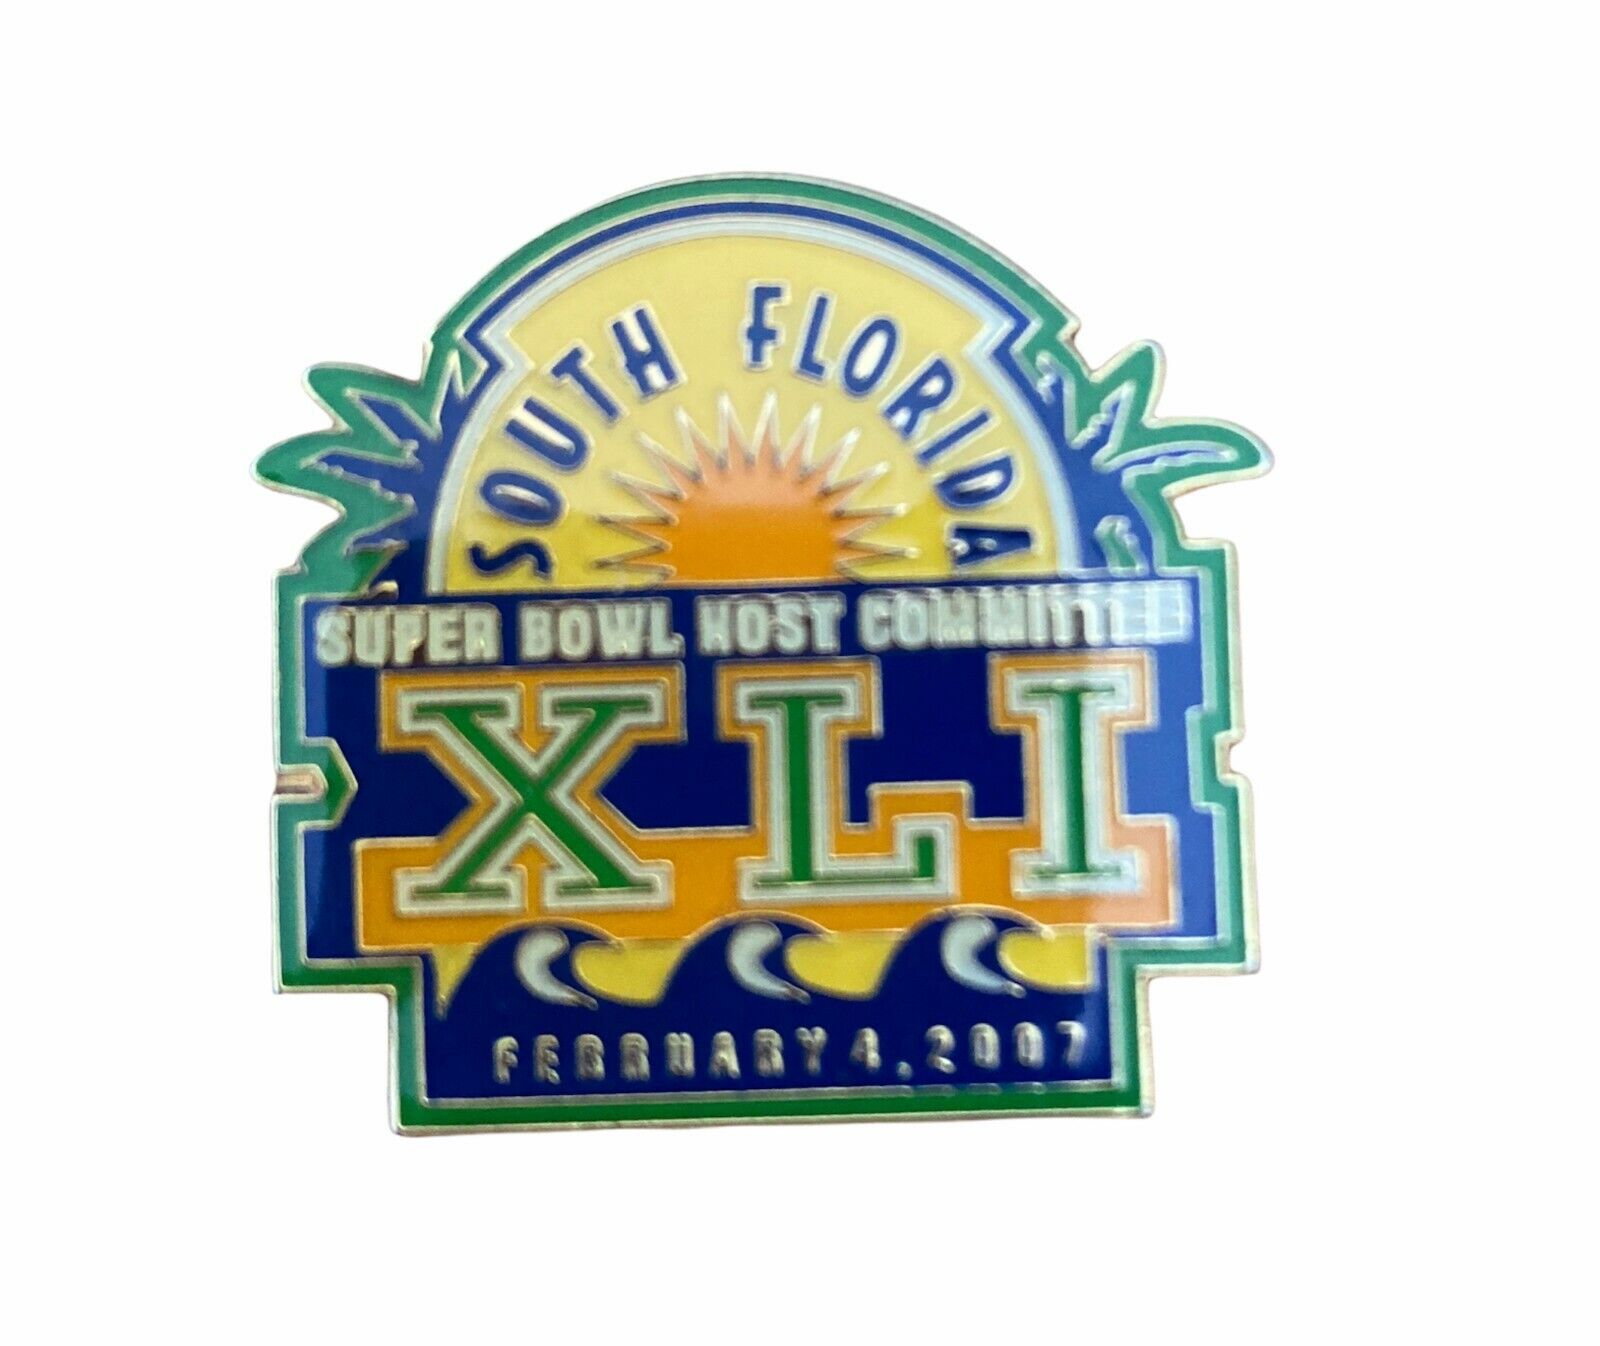 Super Bowl XLI Host Committee NFL 2007 Miami Collectors Pin 